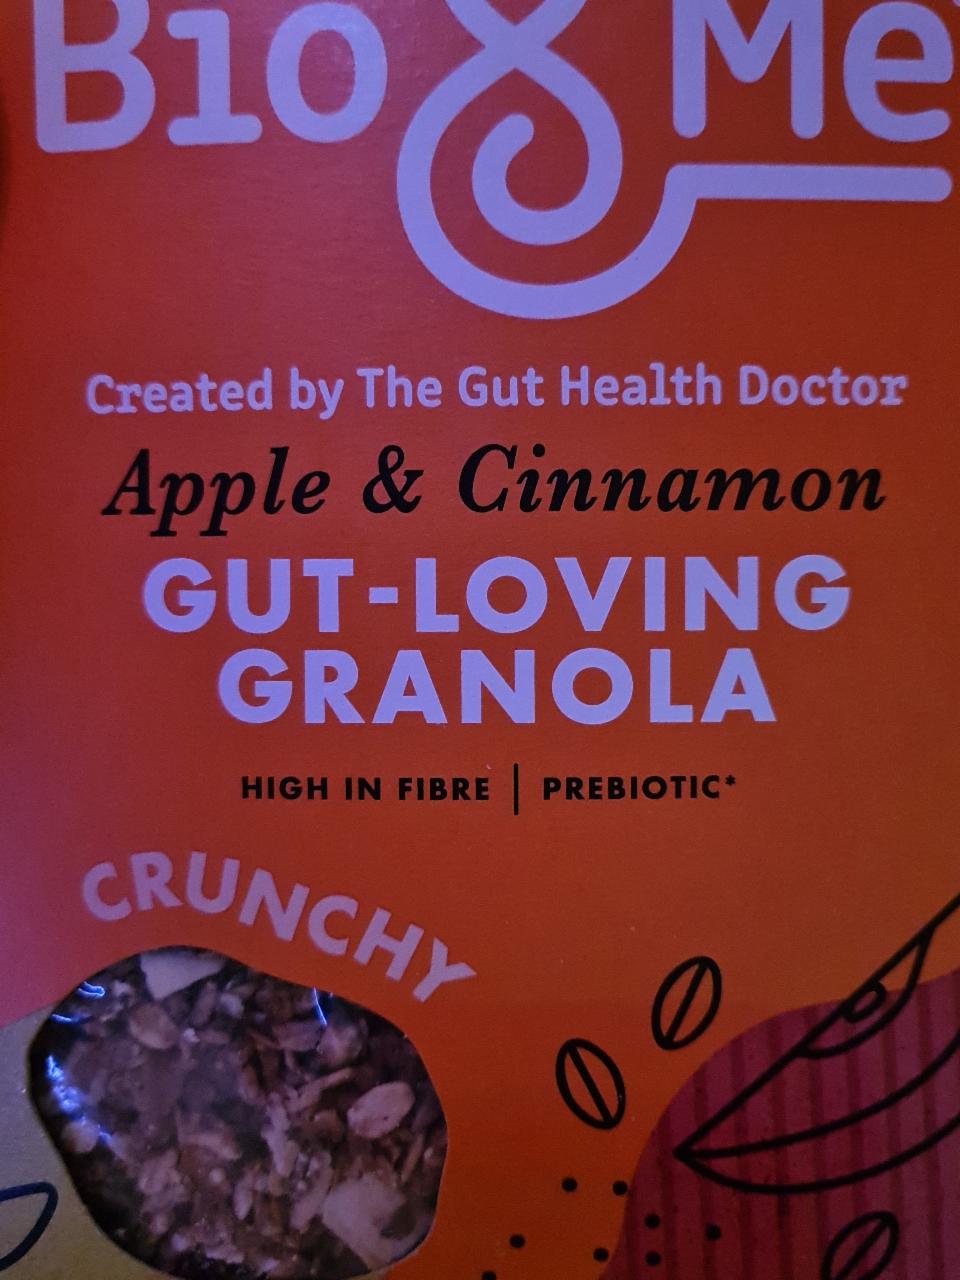 Fotografie - Apple & Cinnamon Gut-Loving Granola Crunchy Bio&Me